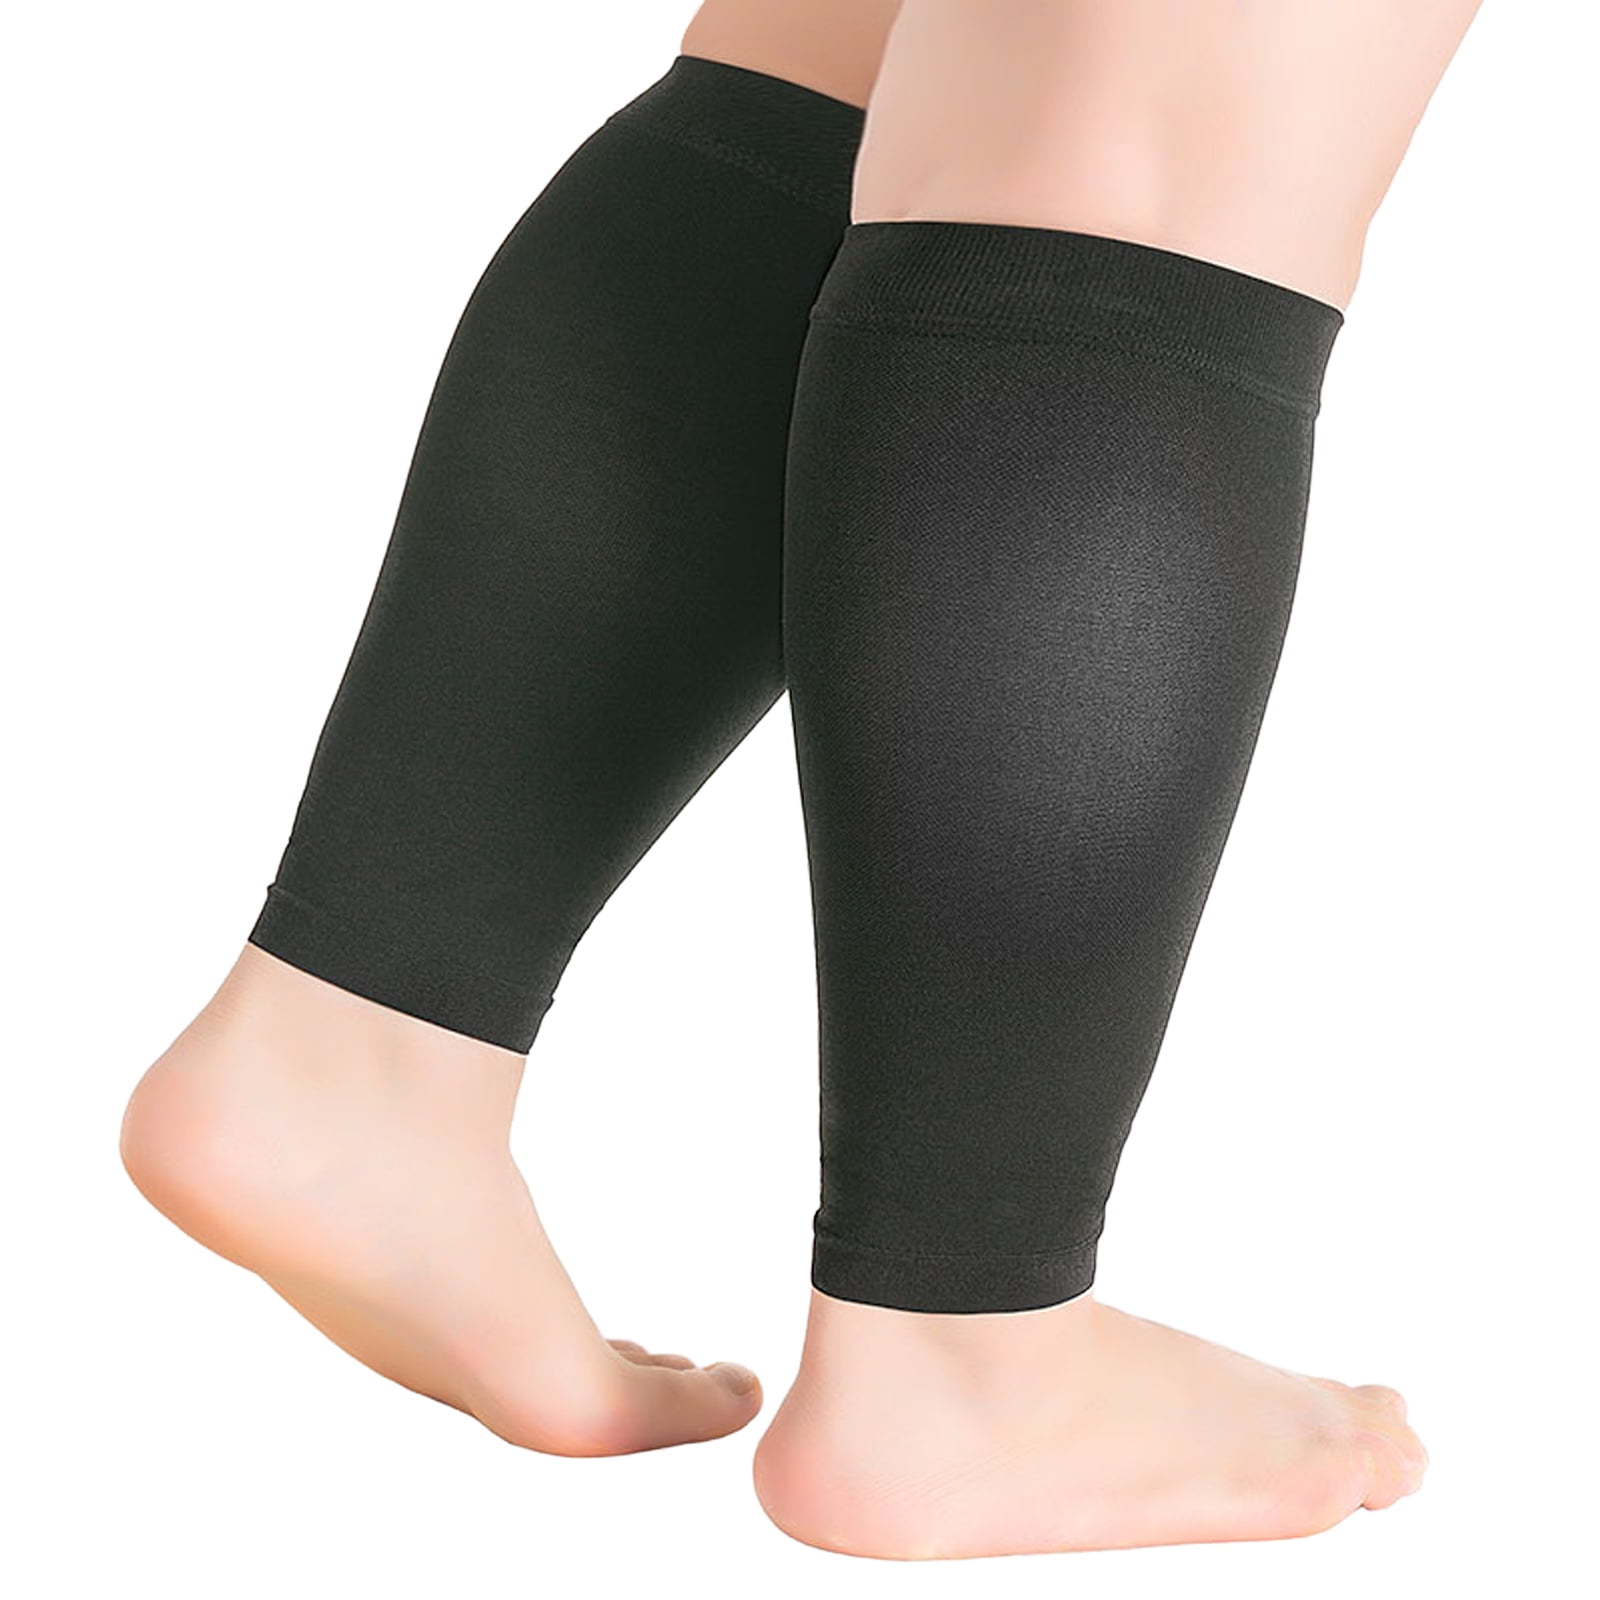 1 Pair Calf Compression Sleeves,Calf/Shin Splint Guard Sock,Great for  Running,Cycling, Walking, Football Soccer,Cross Fit,Travel